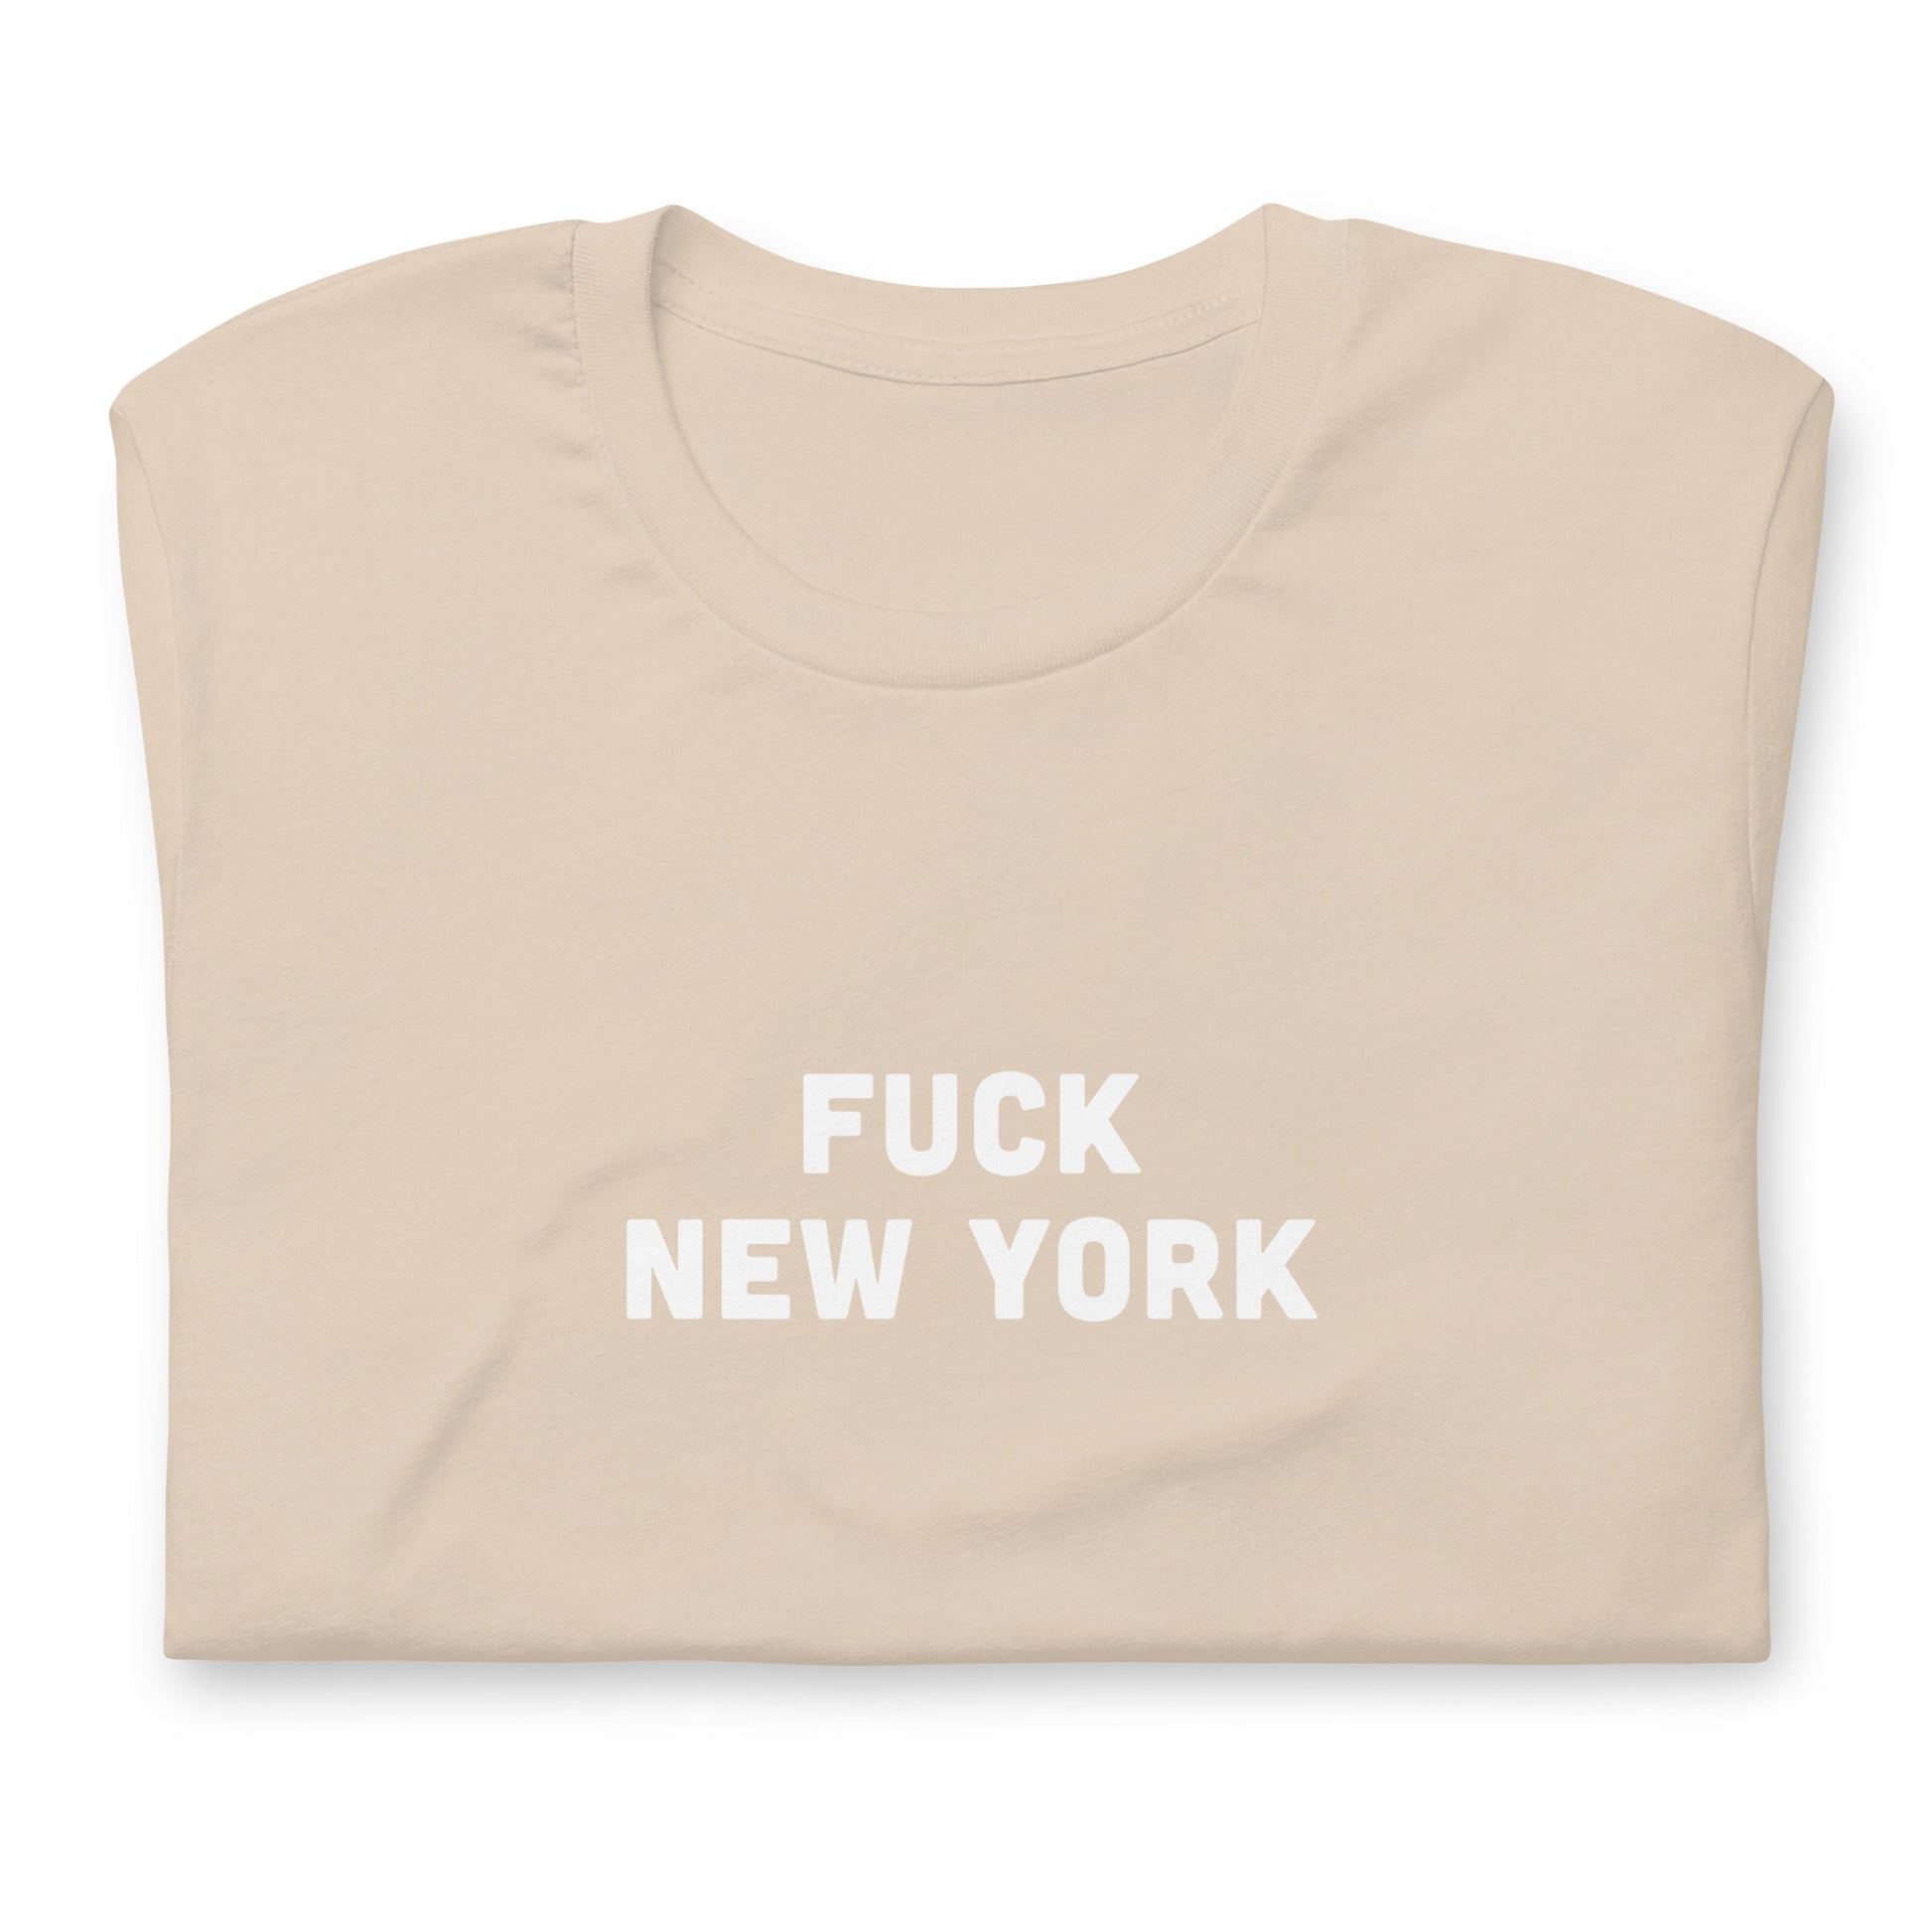 Fuck New York T-Shirt Size L Color Asphalt